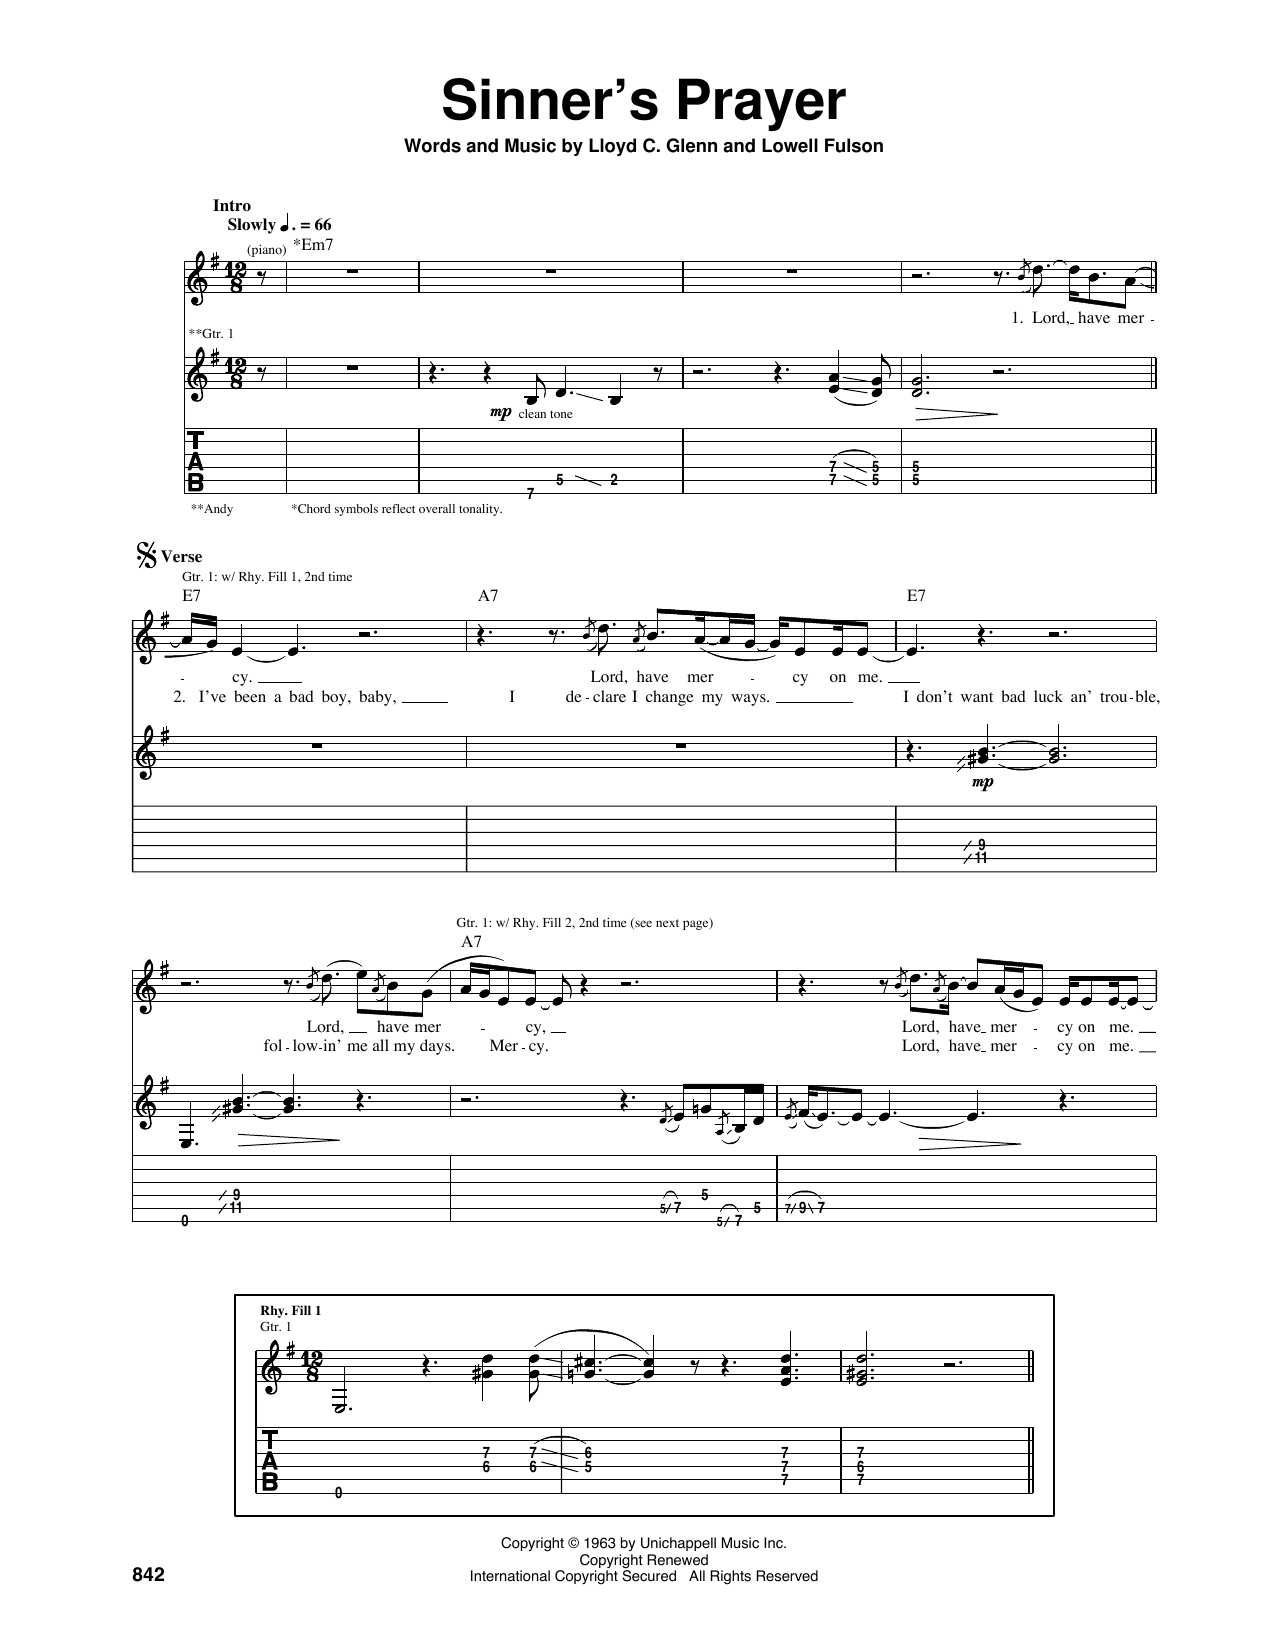 Eric Clapton Sinner's Prayer Sheet Music Notes & Chords for Guitar Tab - Download or Print PDF